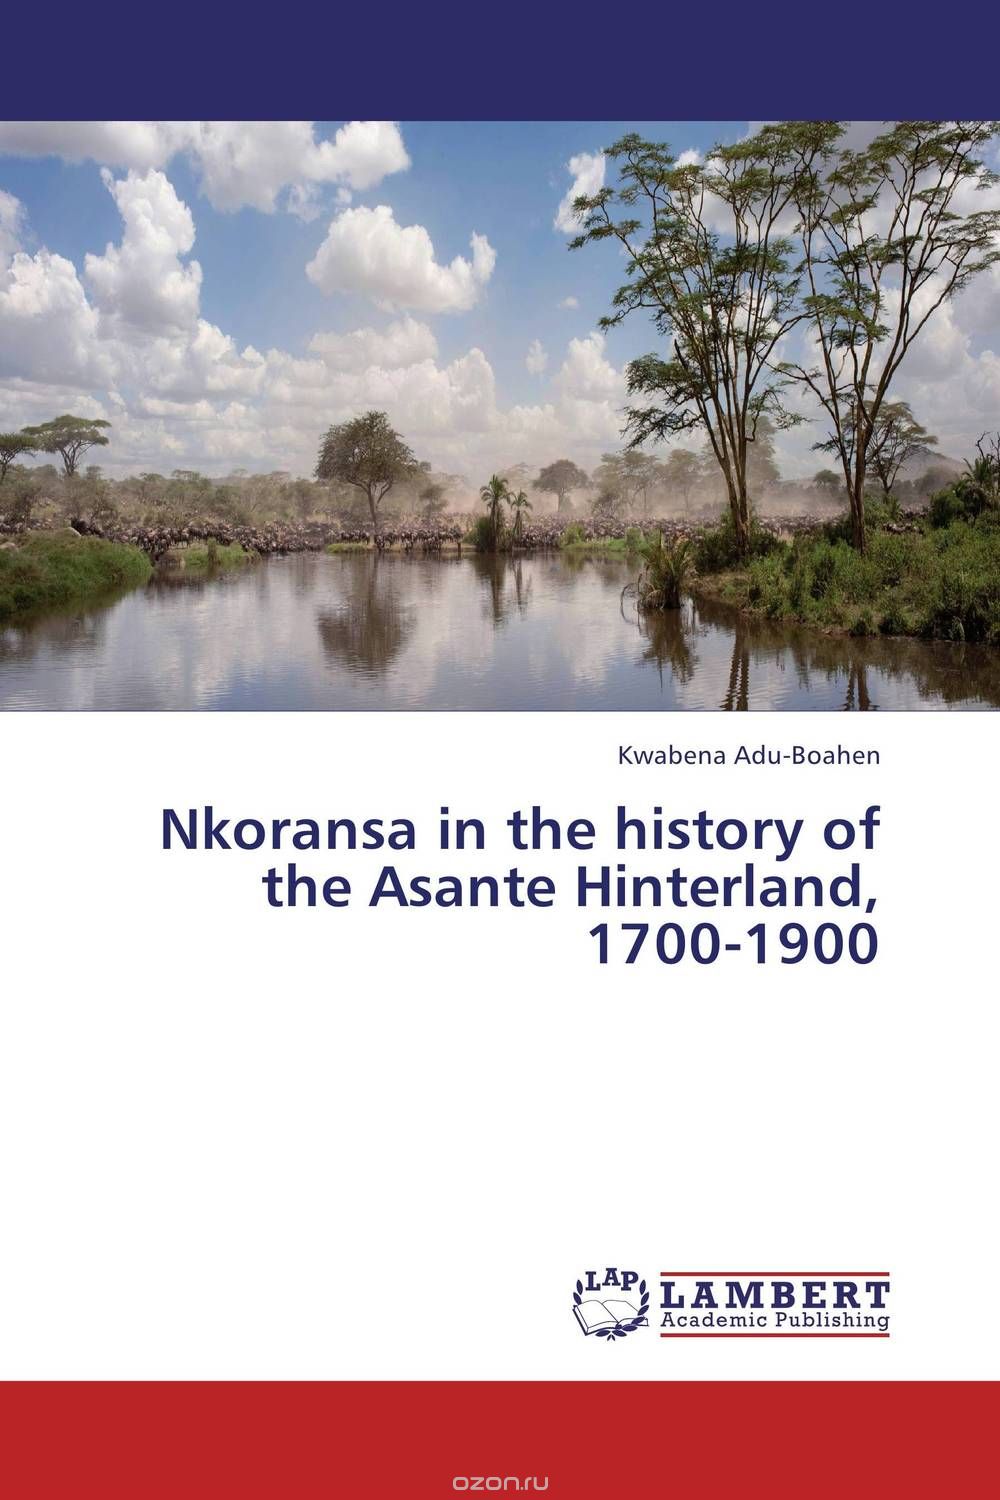 Скачать книгу "Nkoransa in  the history of the Asante Hinterland, 1700-1900"